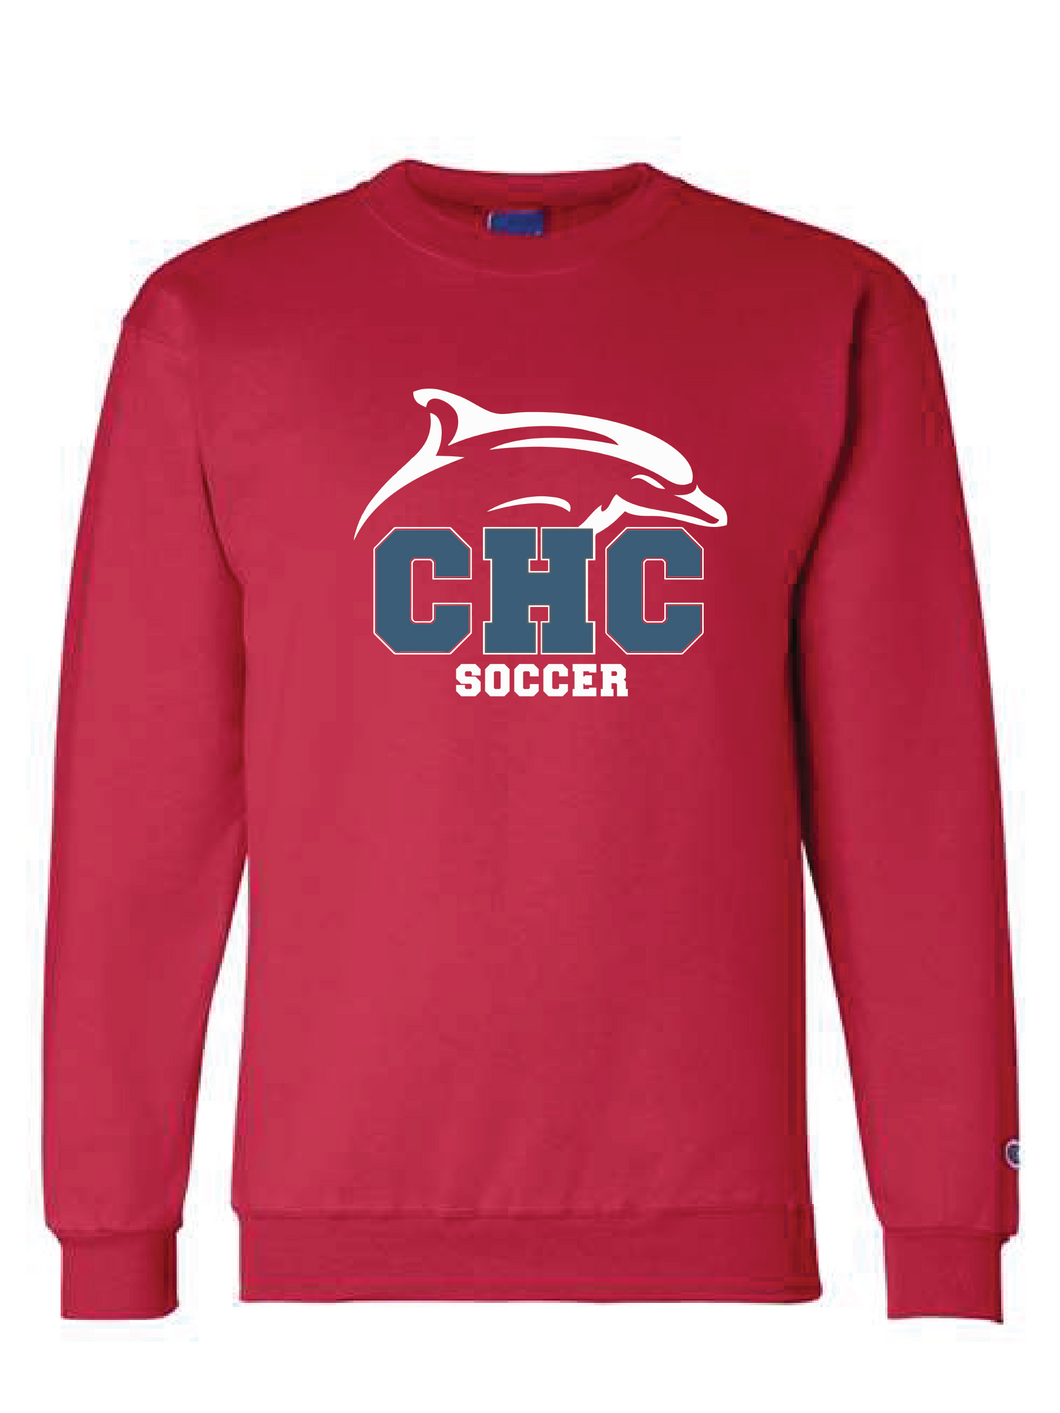 Champion Crewneck Sweatshirt / Scarlet Heather  / Cape Henry Soccer